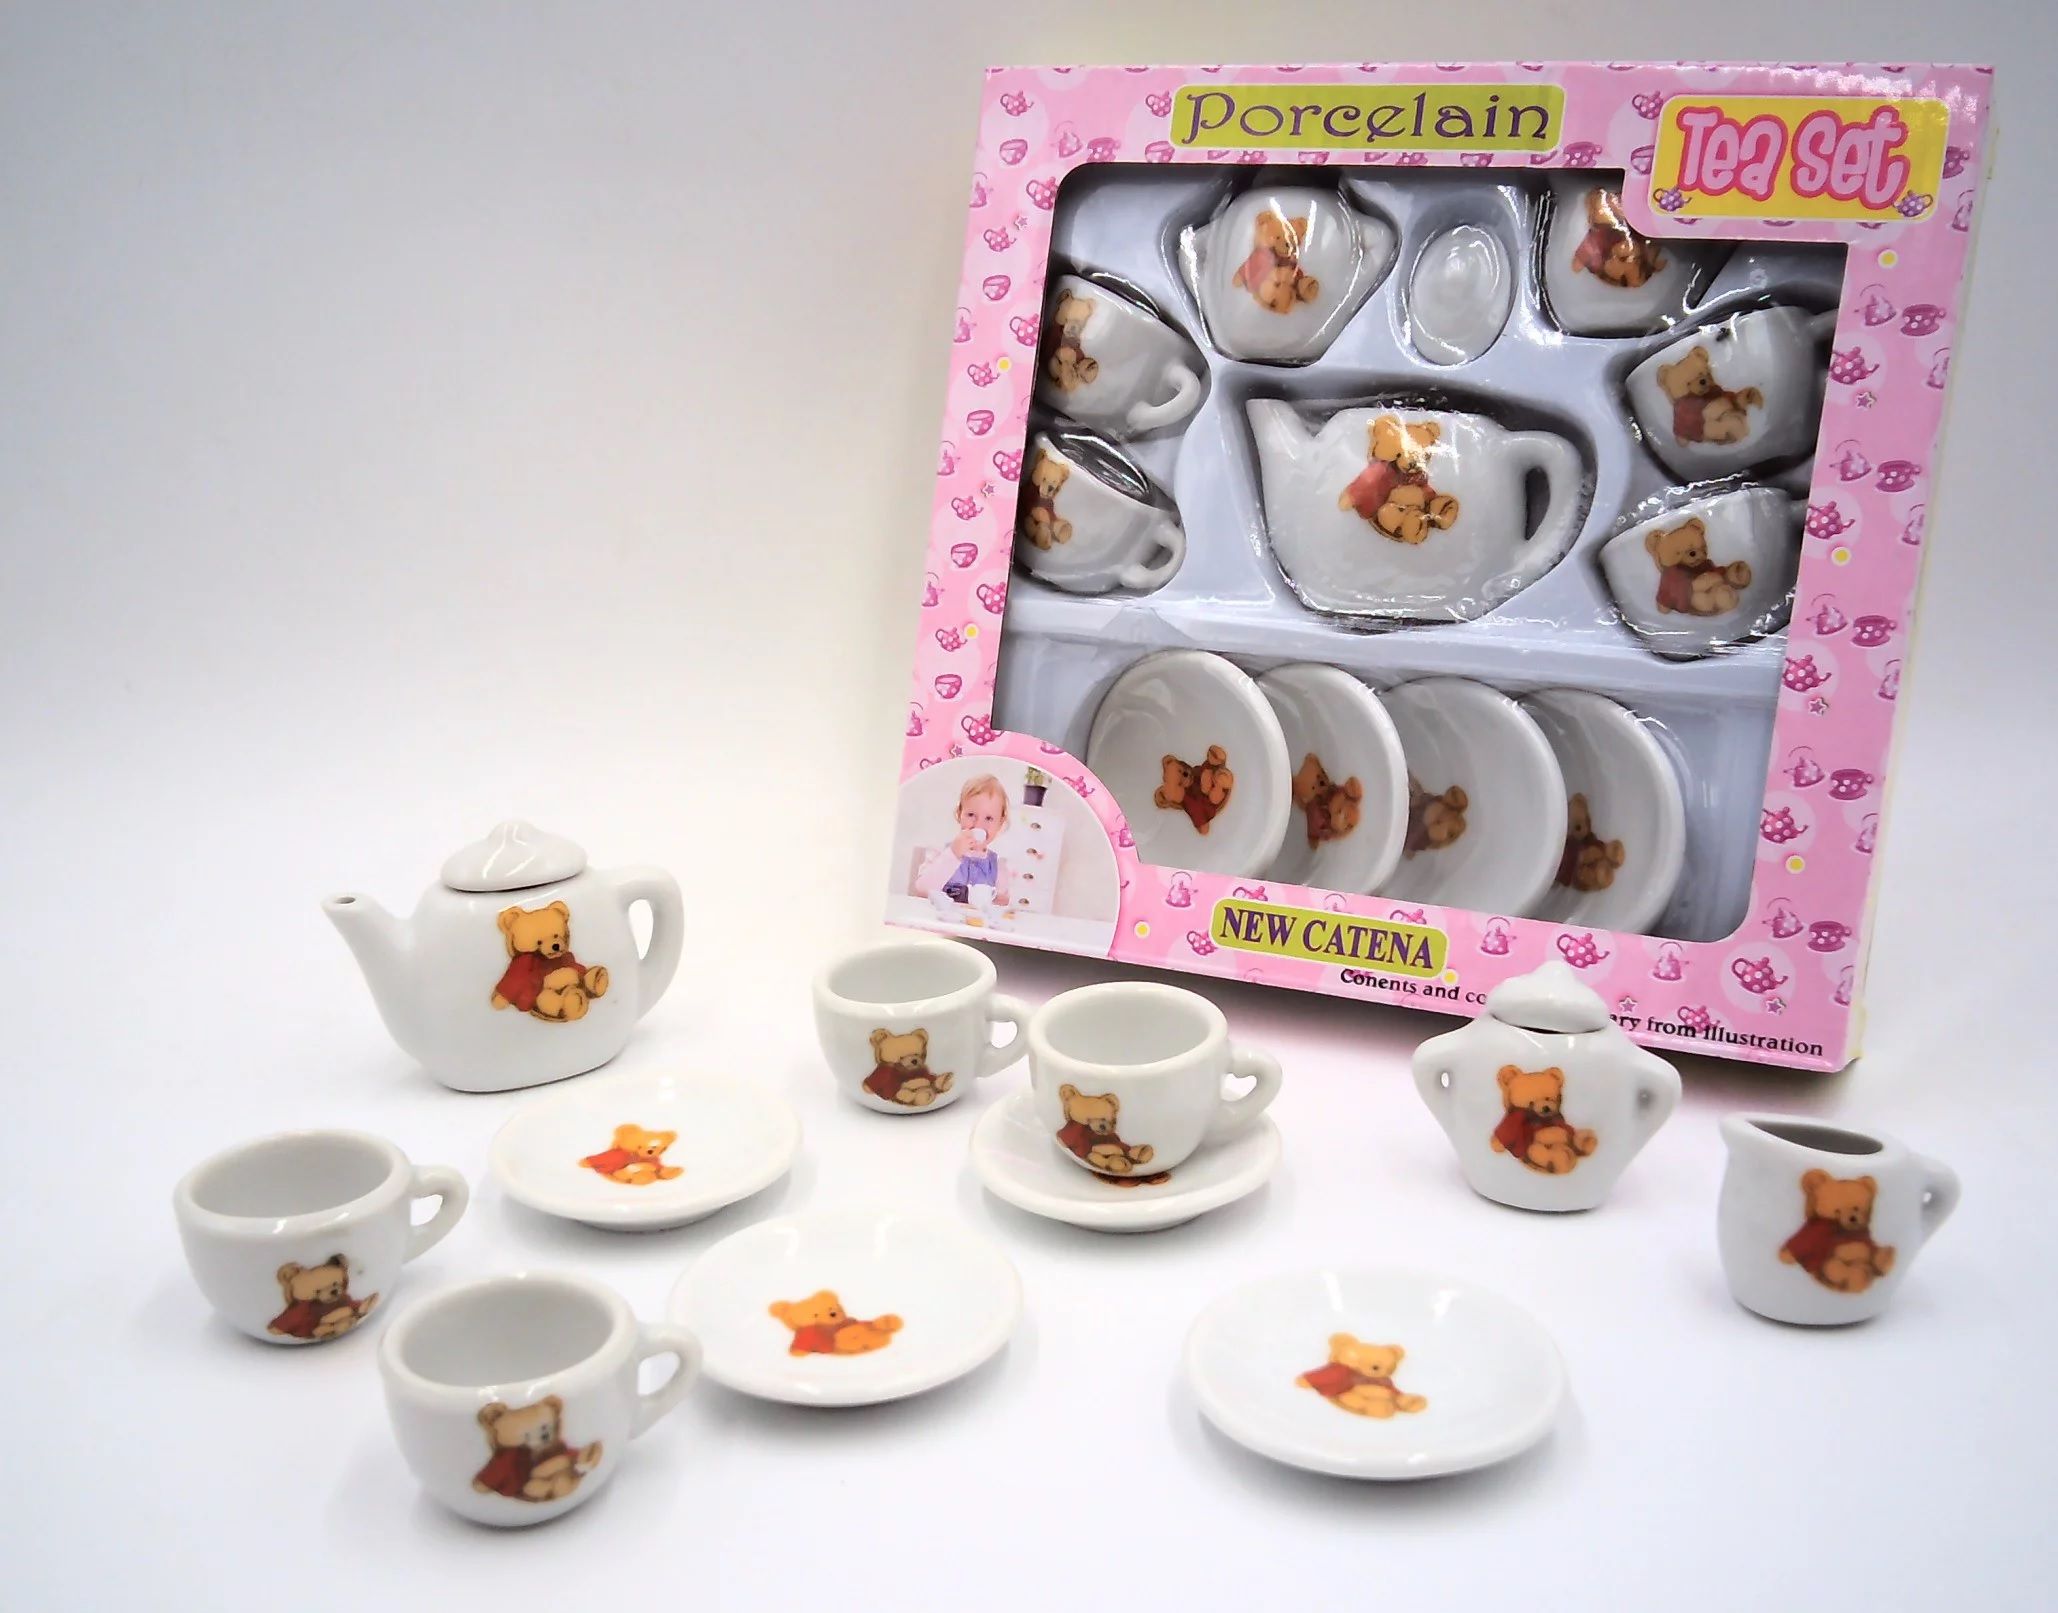 GIRL FUN TOYS 13 Piece Real Porcelain Ceramic Tea Set Toy For Little Girls